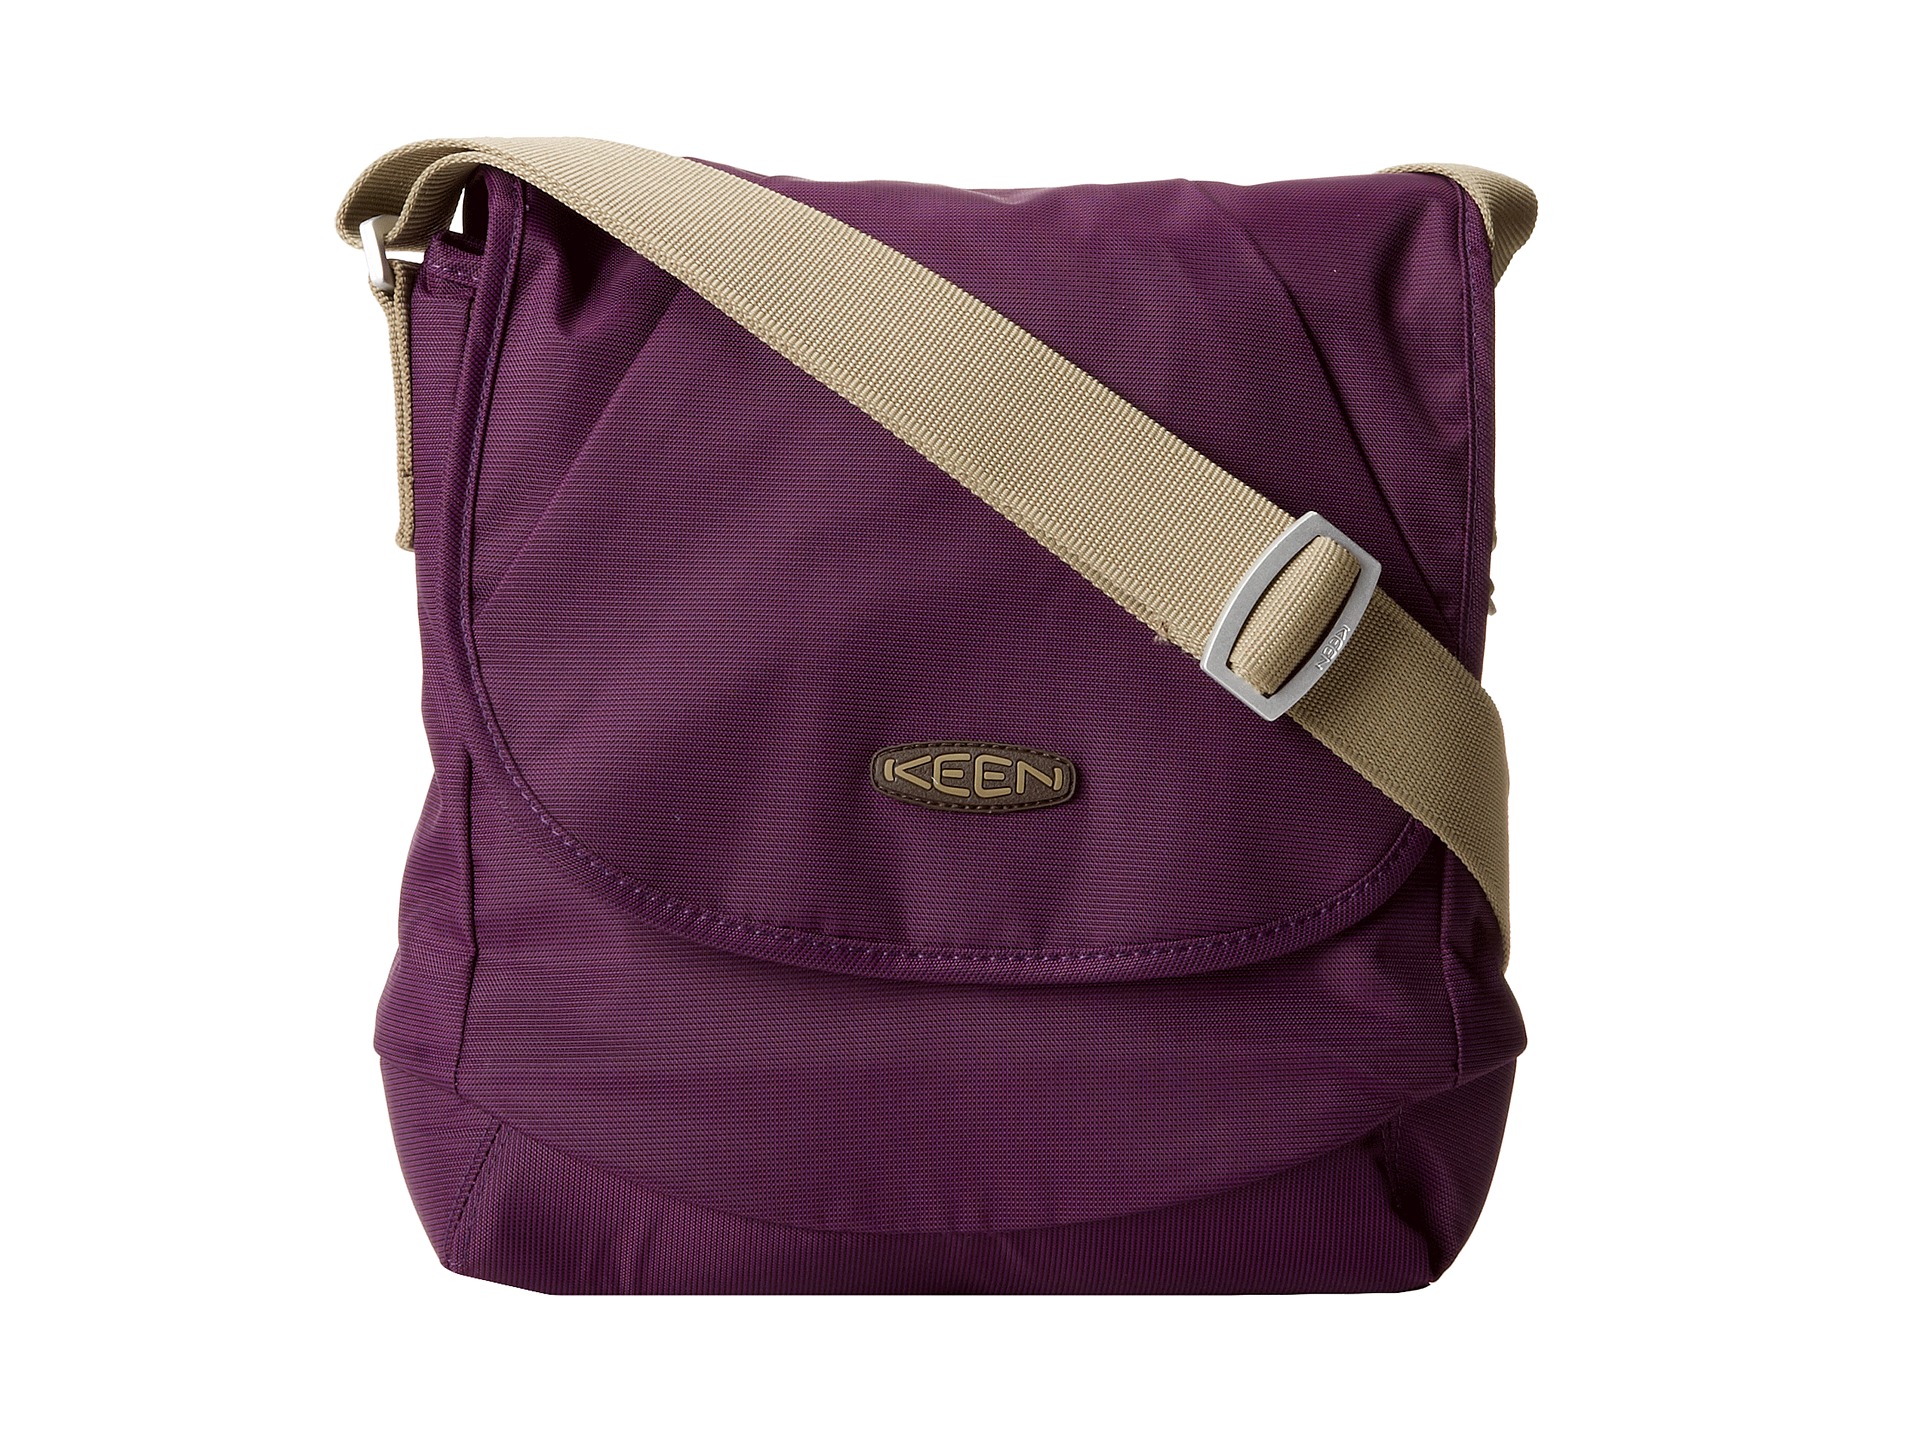 Keen Brooklyn Ii Travel Bag | Shipped Free at Zappos